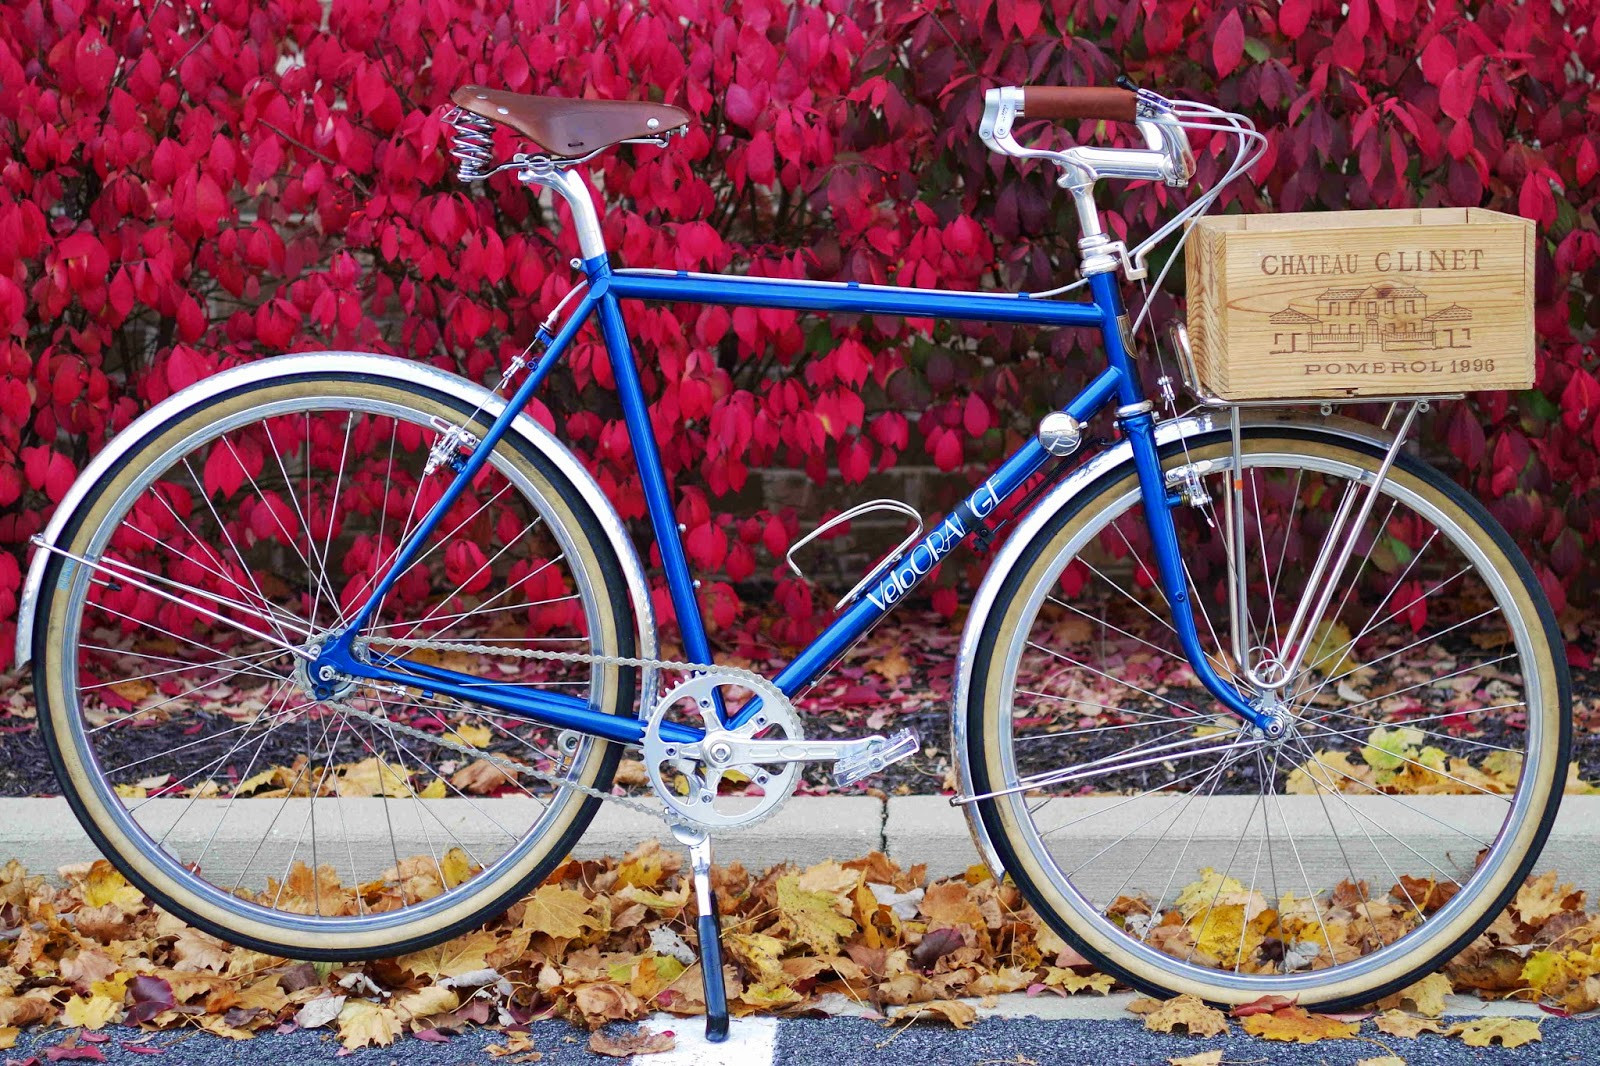 Best ideas about DIY Bike Basket
. Save or Pin The Velo ORANGE Blog Wine Crate Bike Basket A DIY Bike Now.